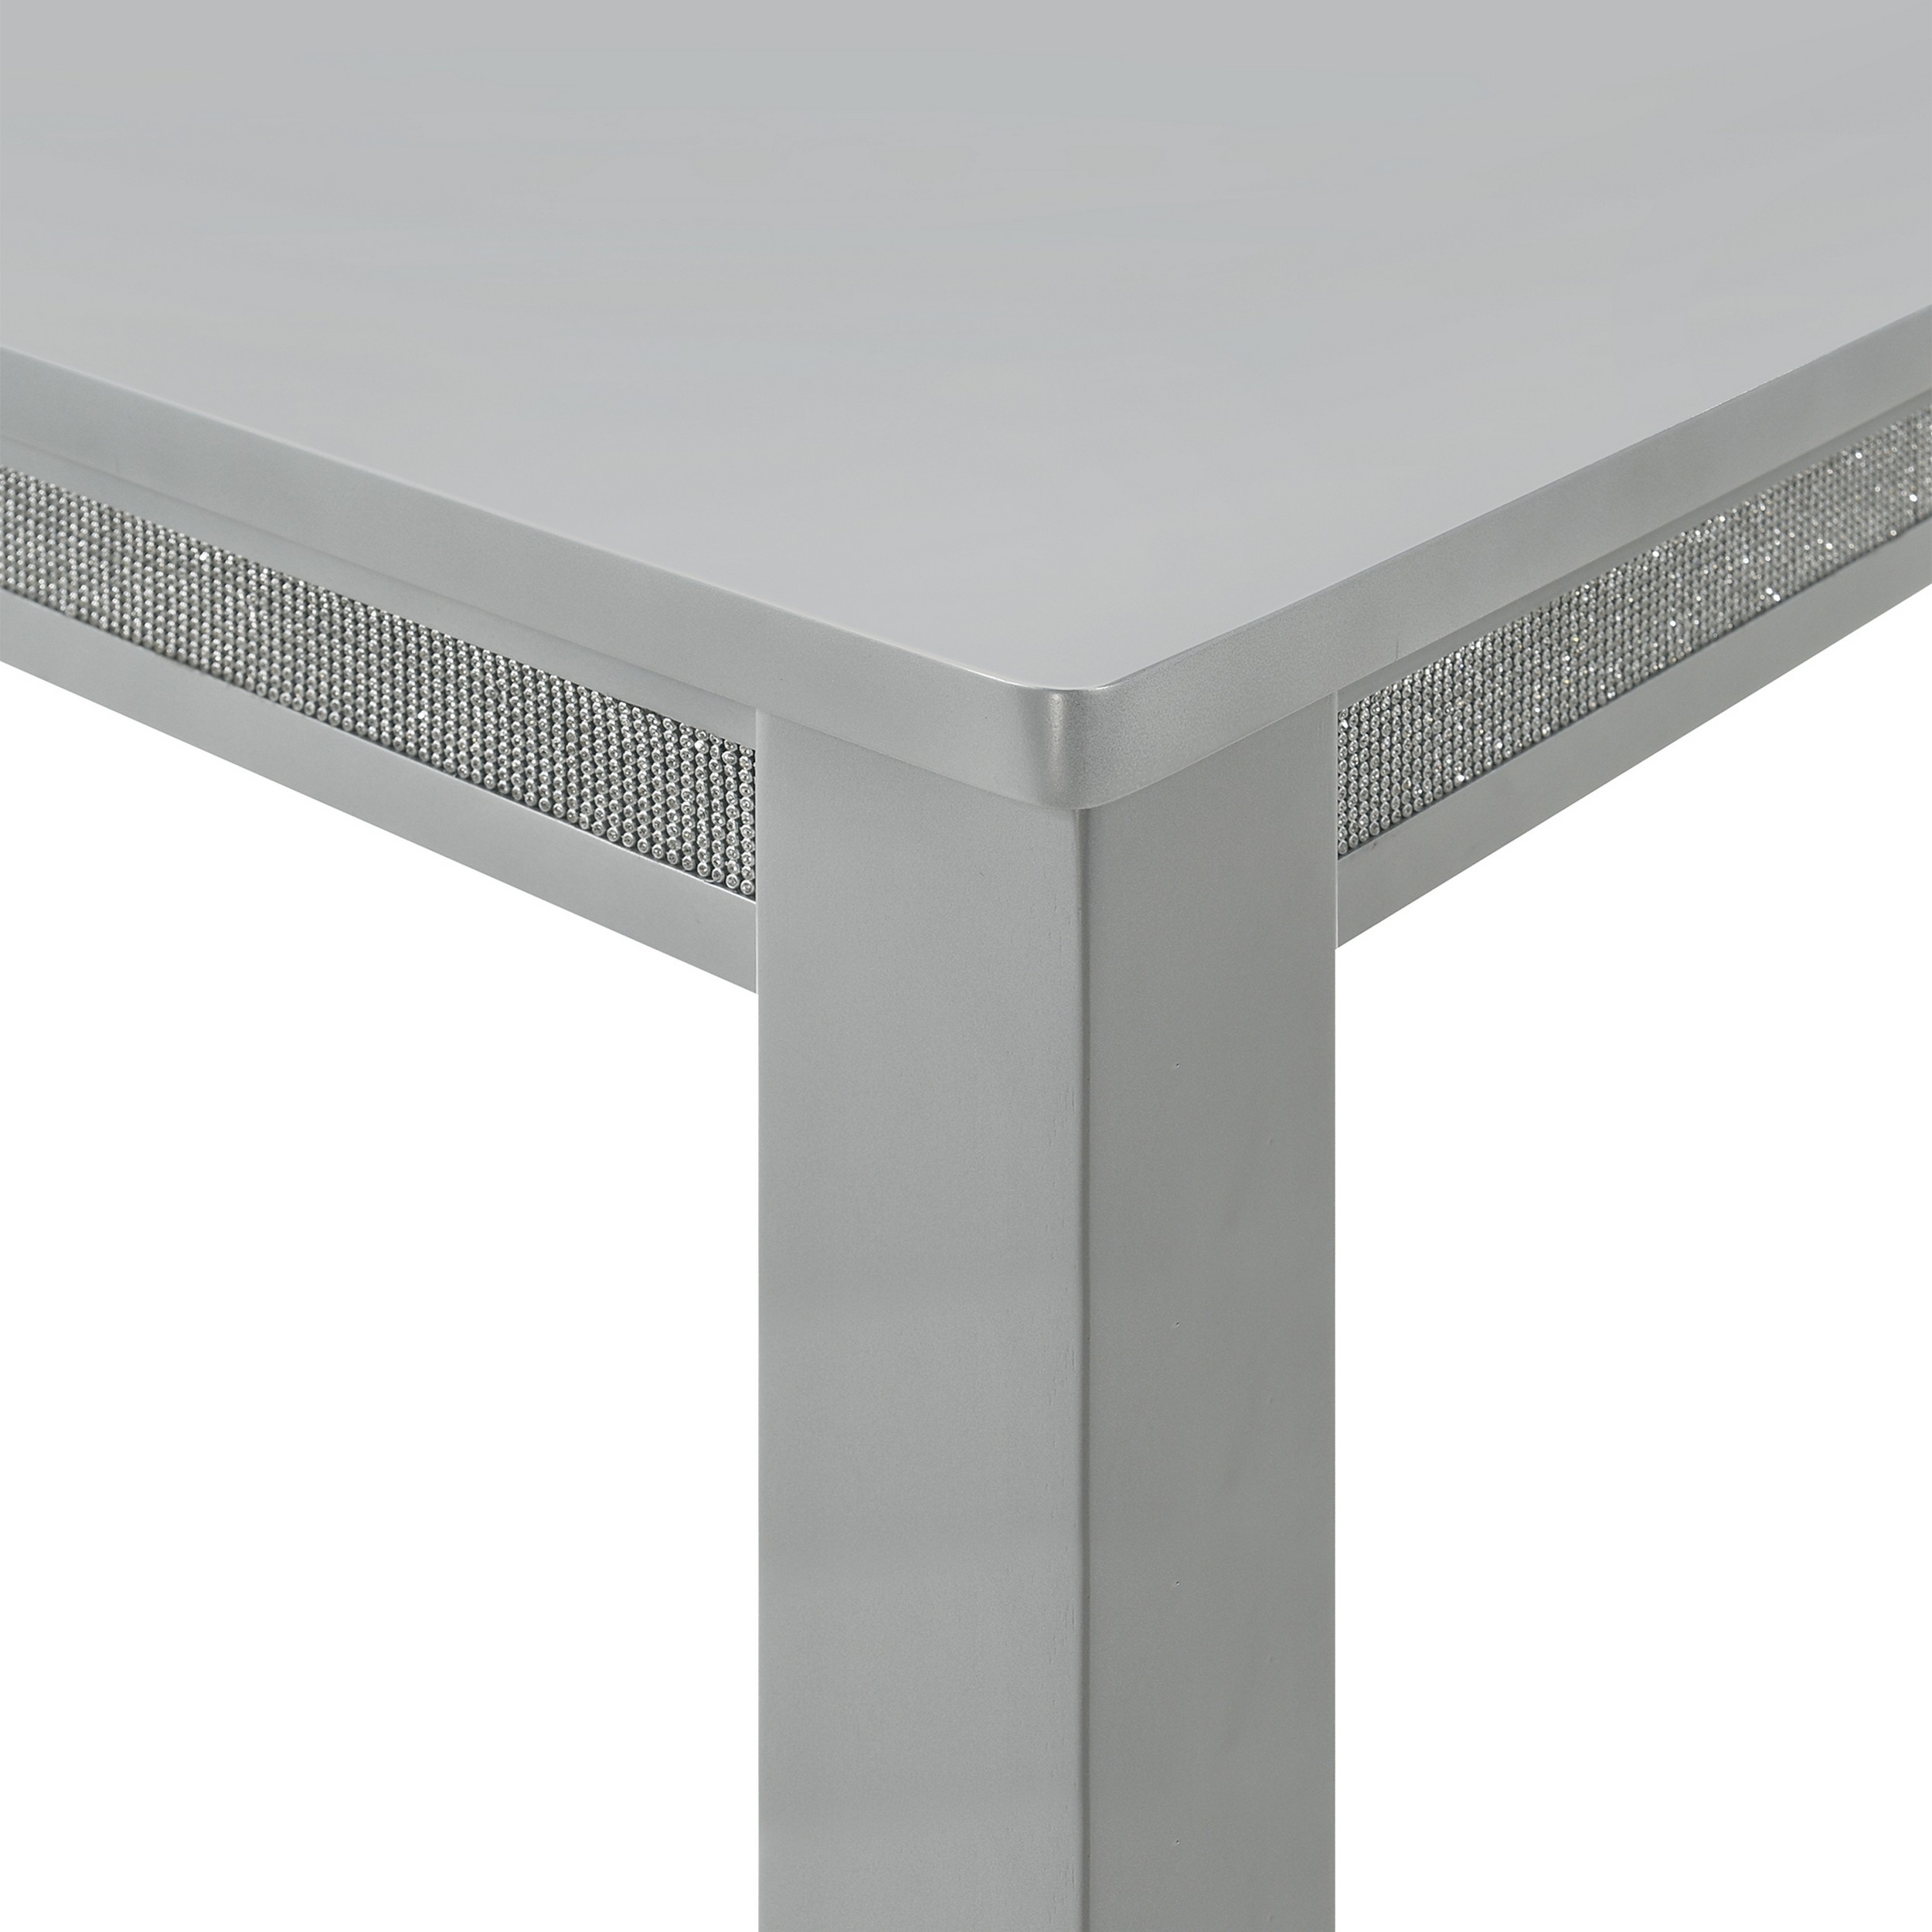 Liam 64 Inch Dining Table, Spacious Rectangular Top, Gray Wood Frame -Saltoro Sherpi